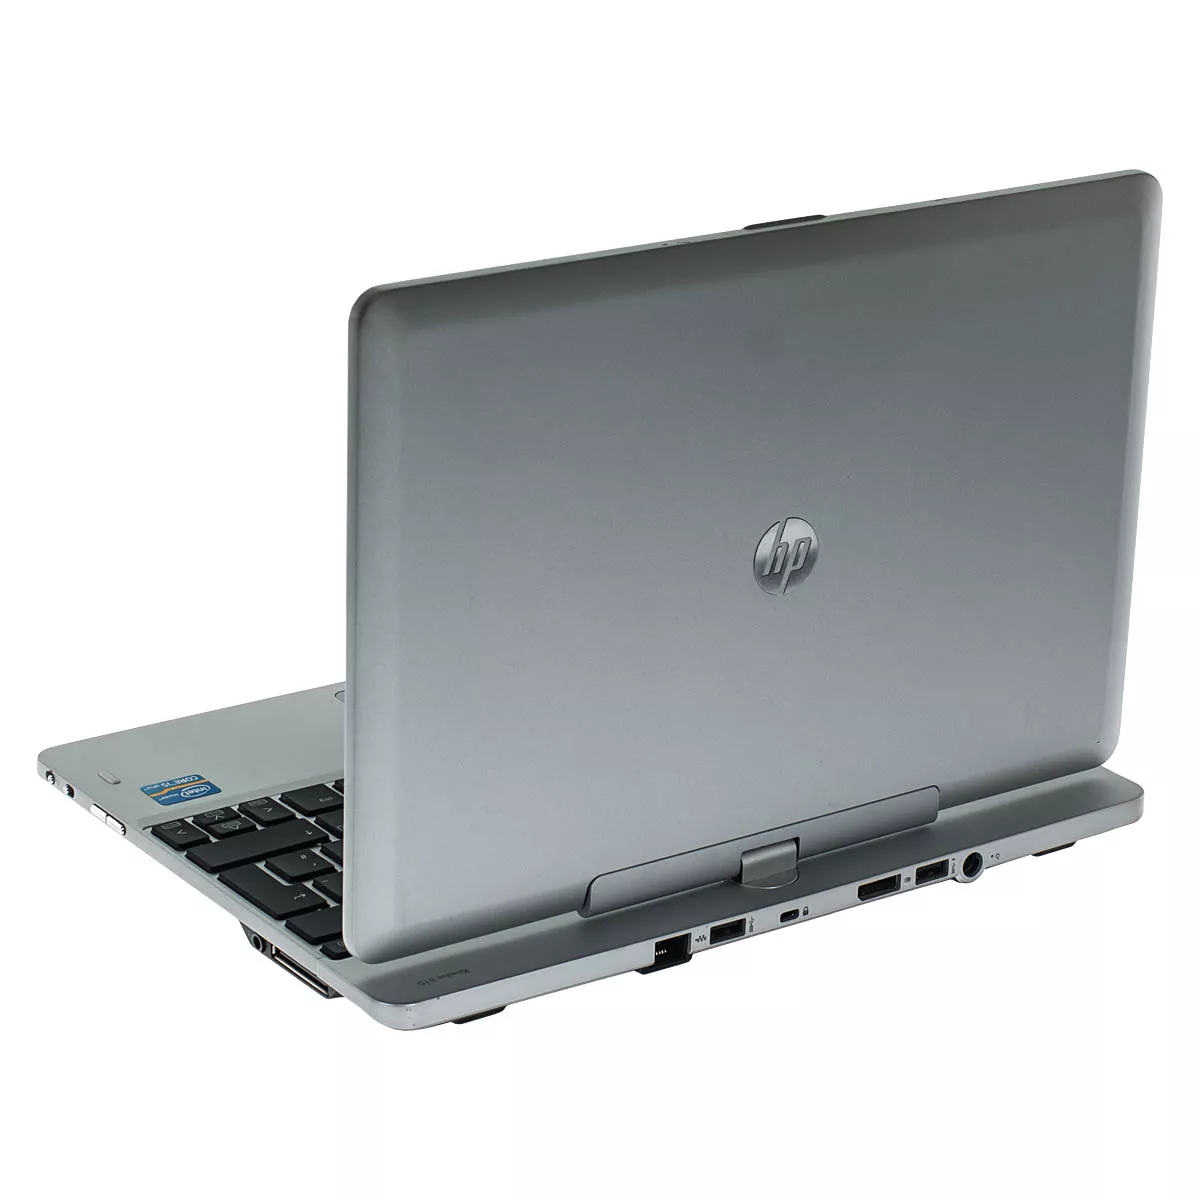 HP EliteBook Revolve 810 G3 Core i5 5300U 2,3 GHz Webcam